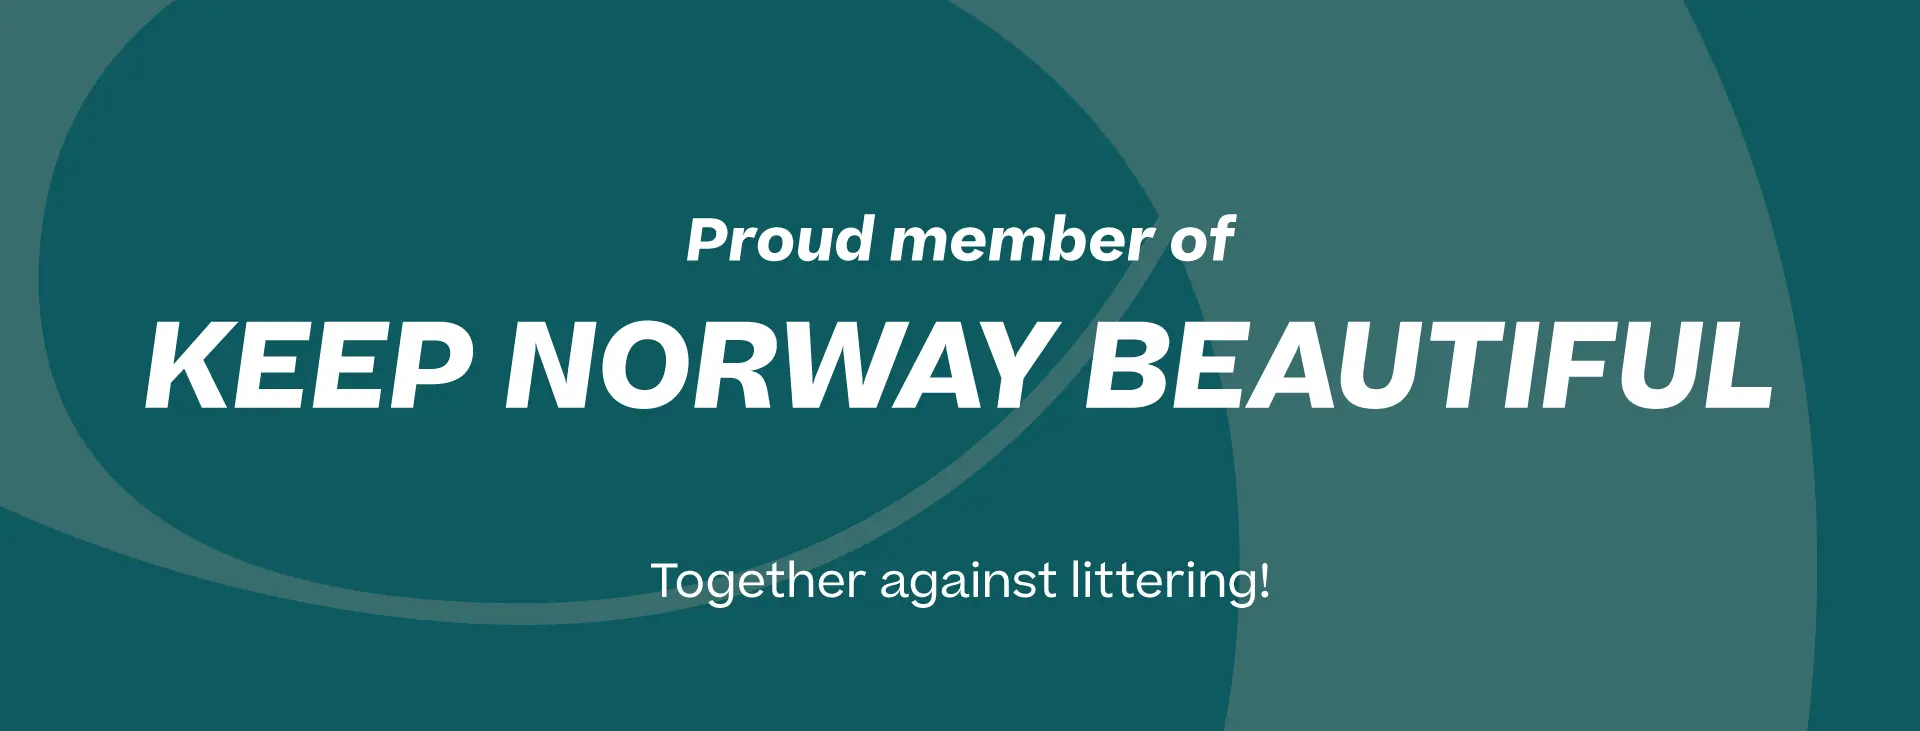 Keep Norway Clean - Graphic design